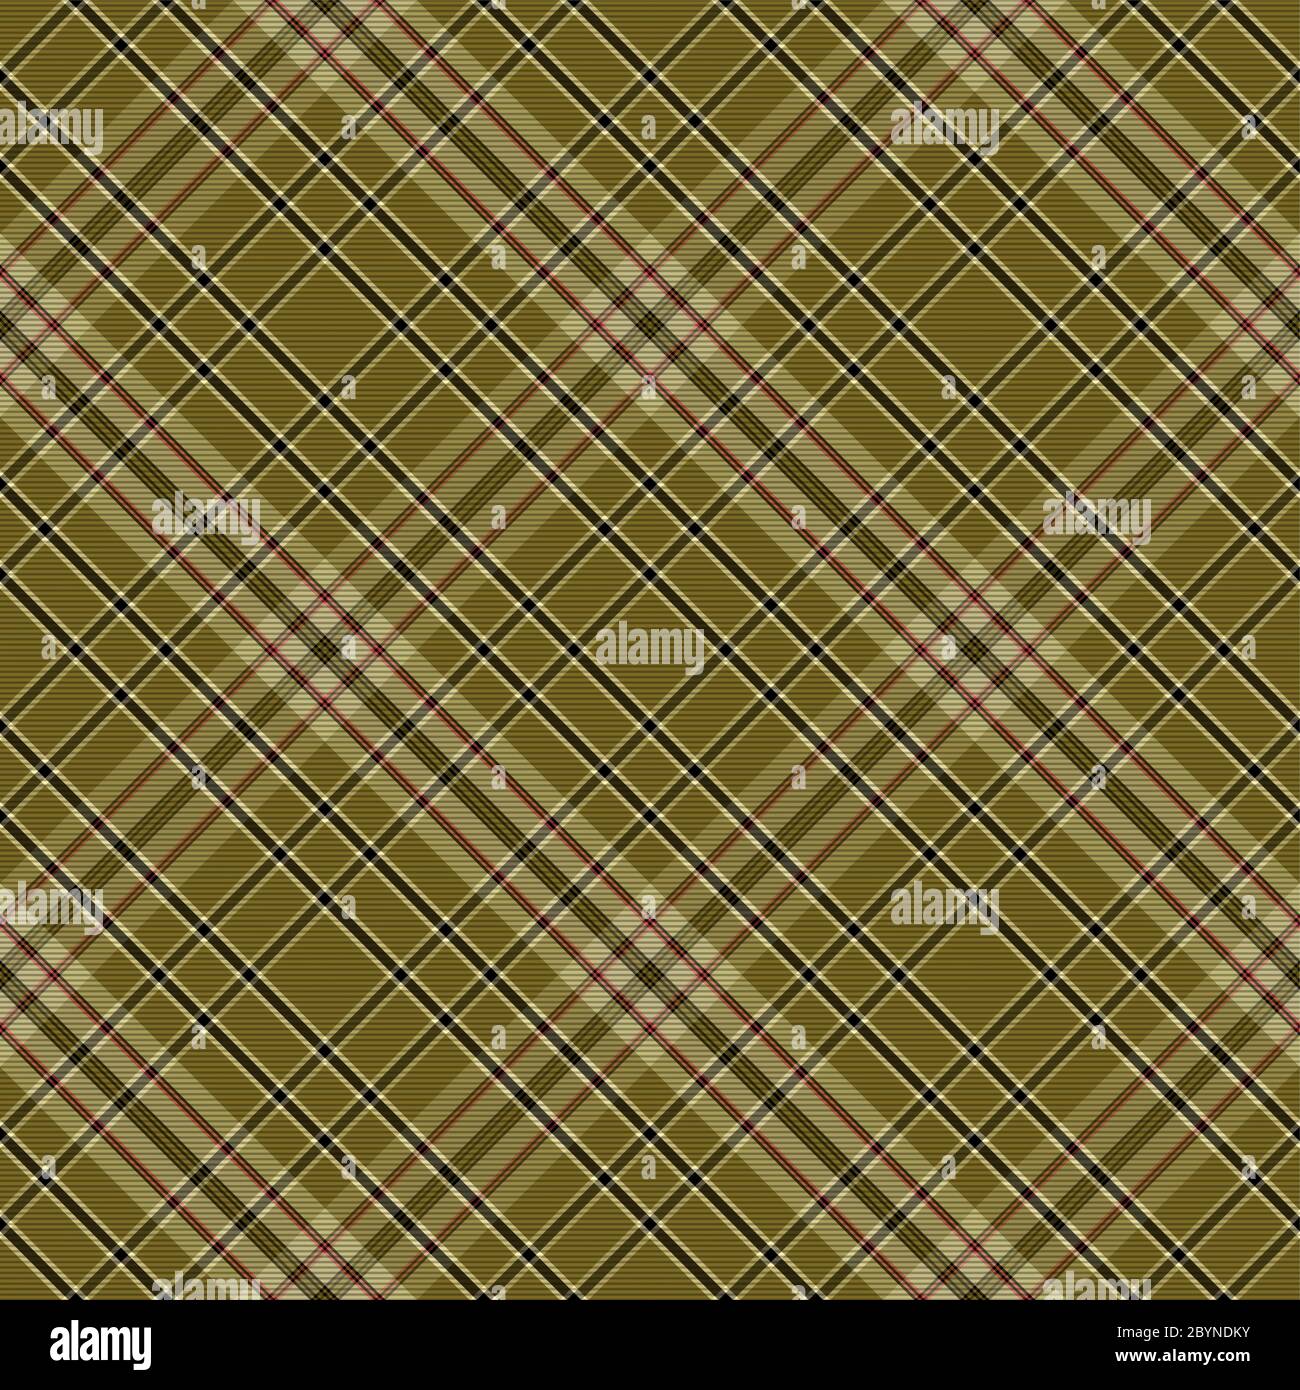 Seamless tartan plaid pattern. fabric pattern. Checkered texture